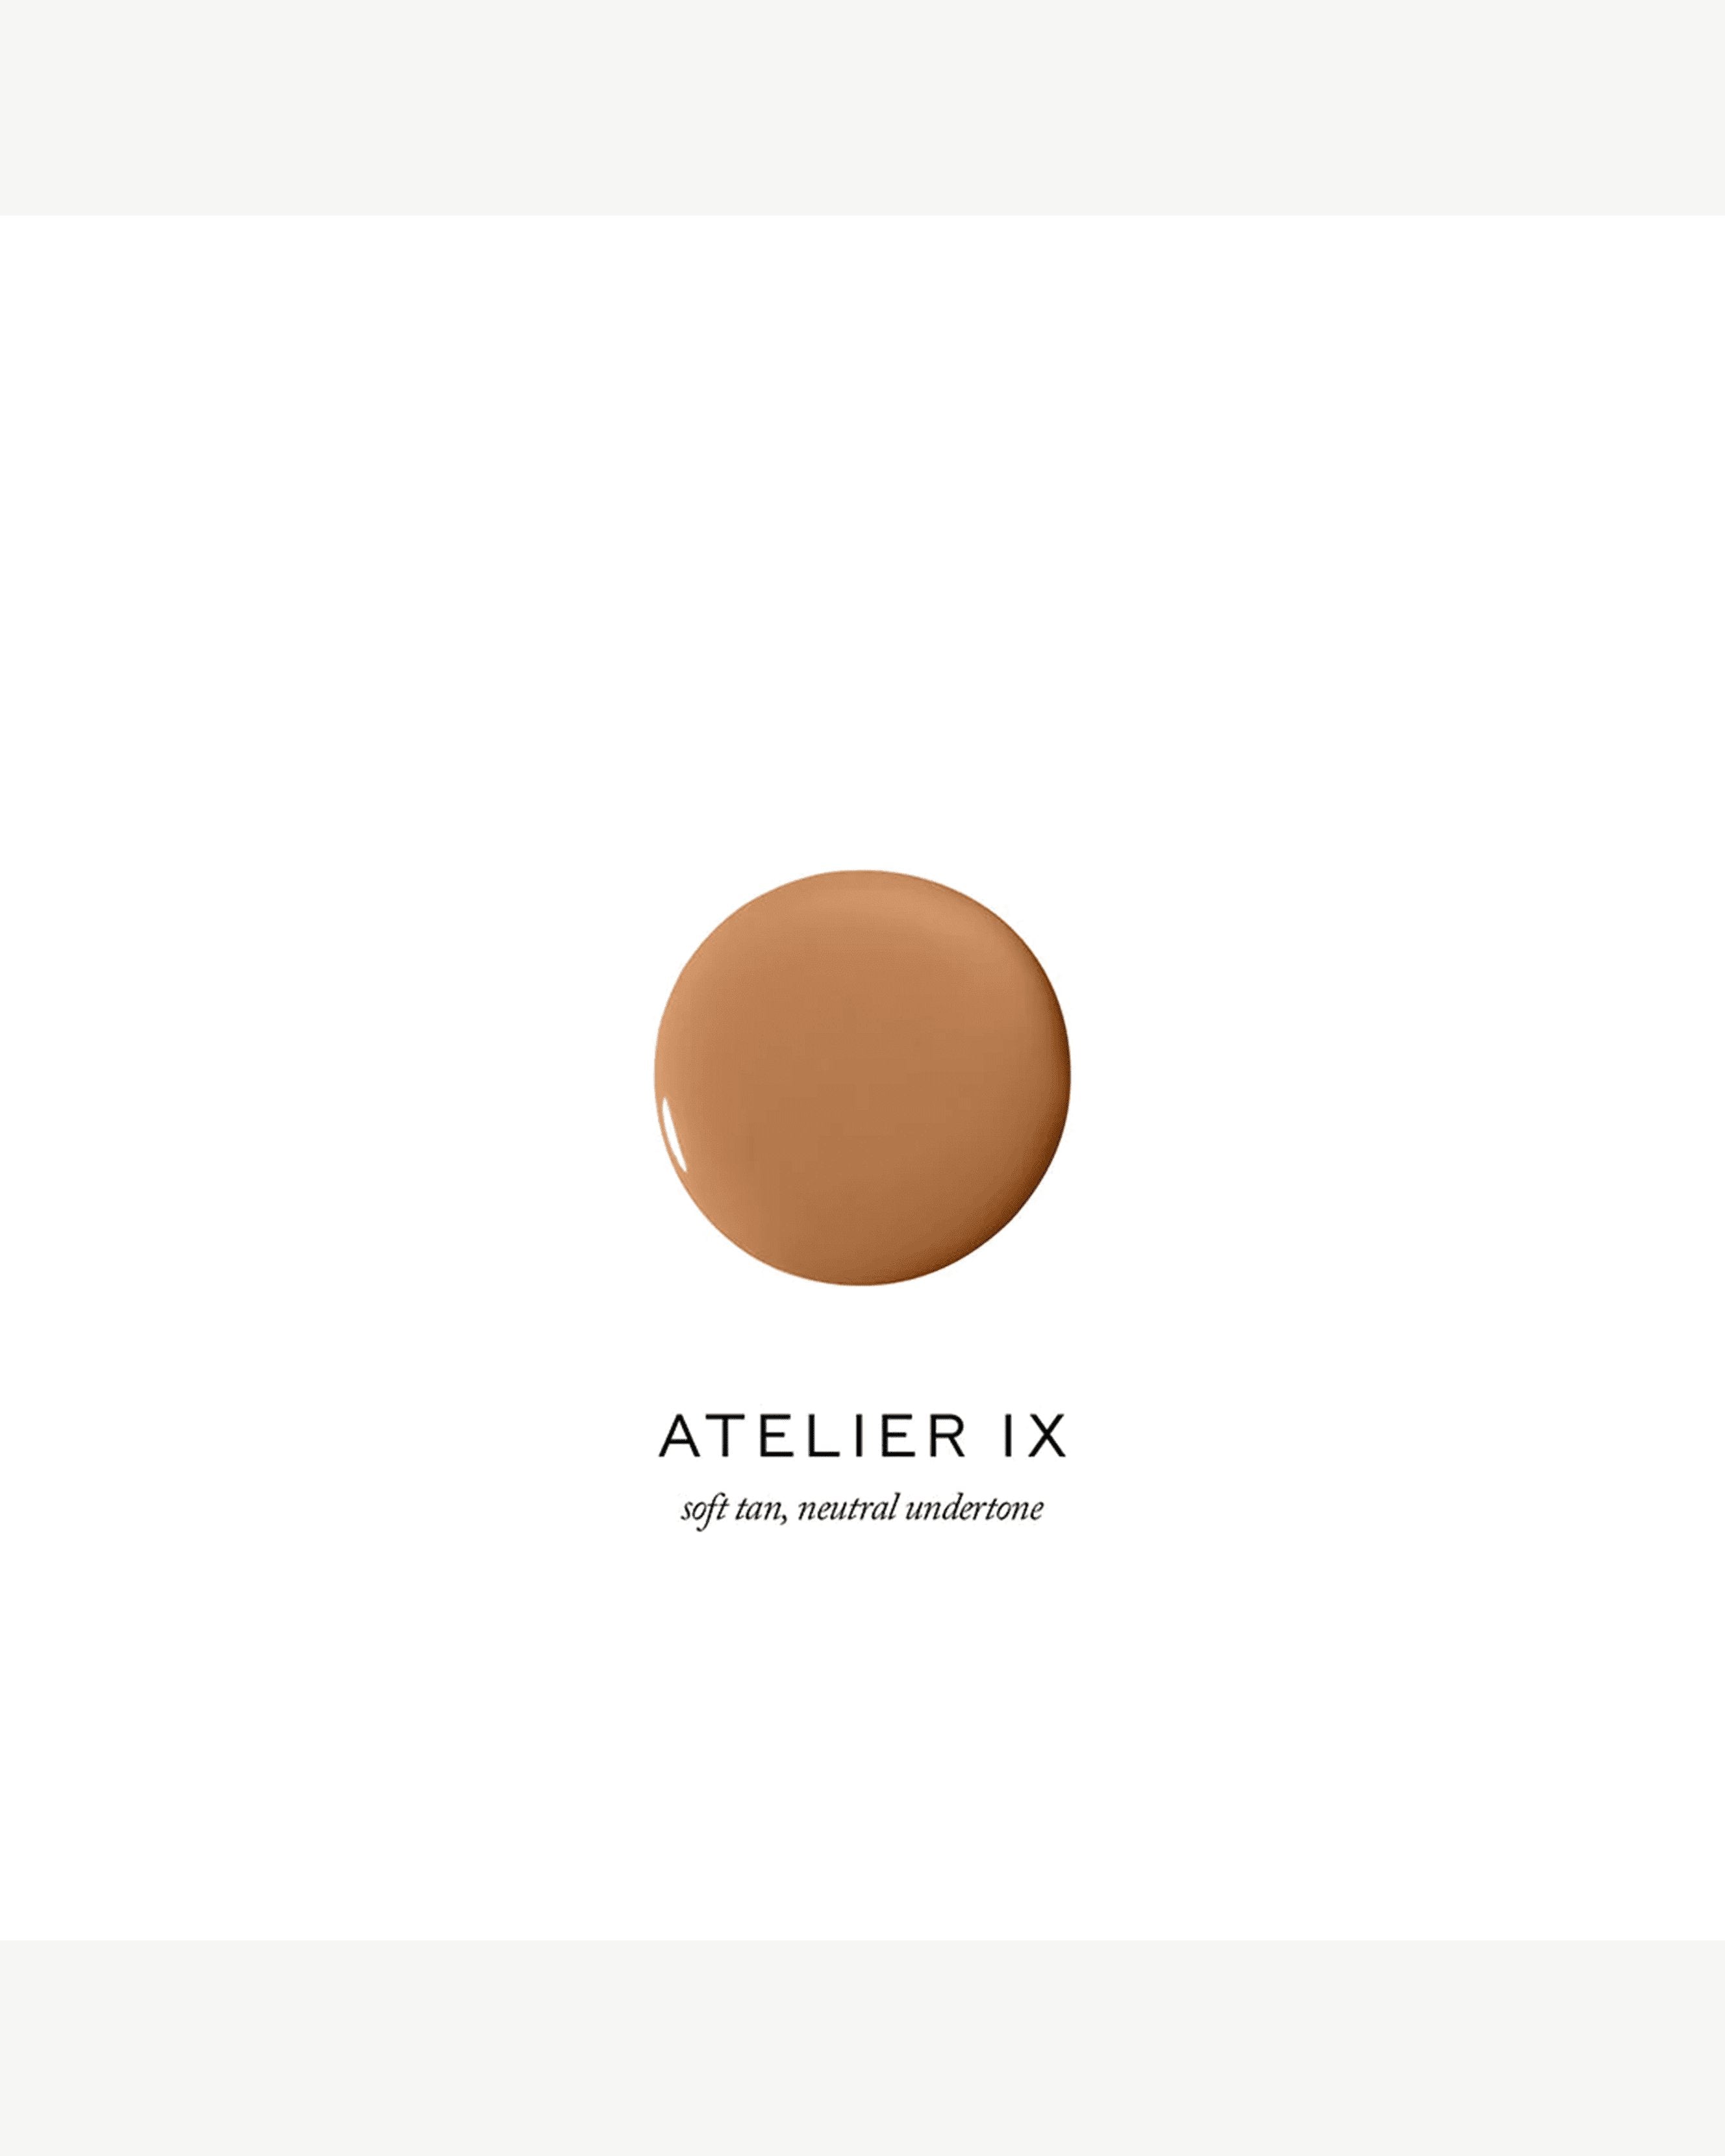 Atelier IX (soft tan, neutral undertone)